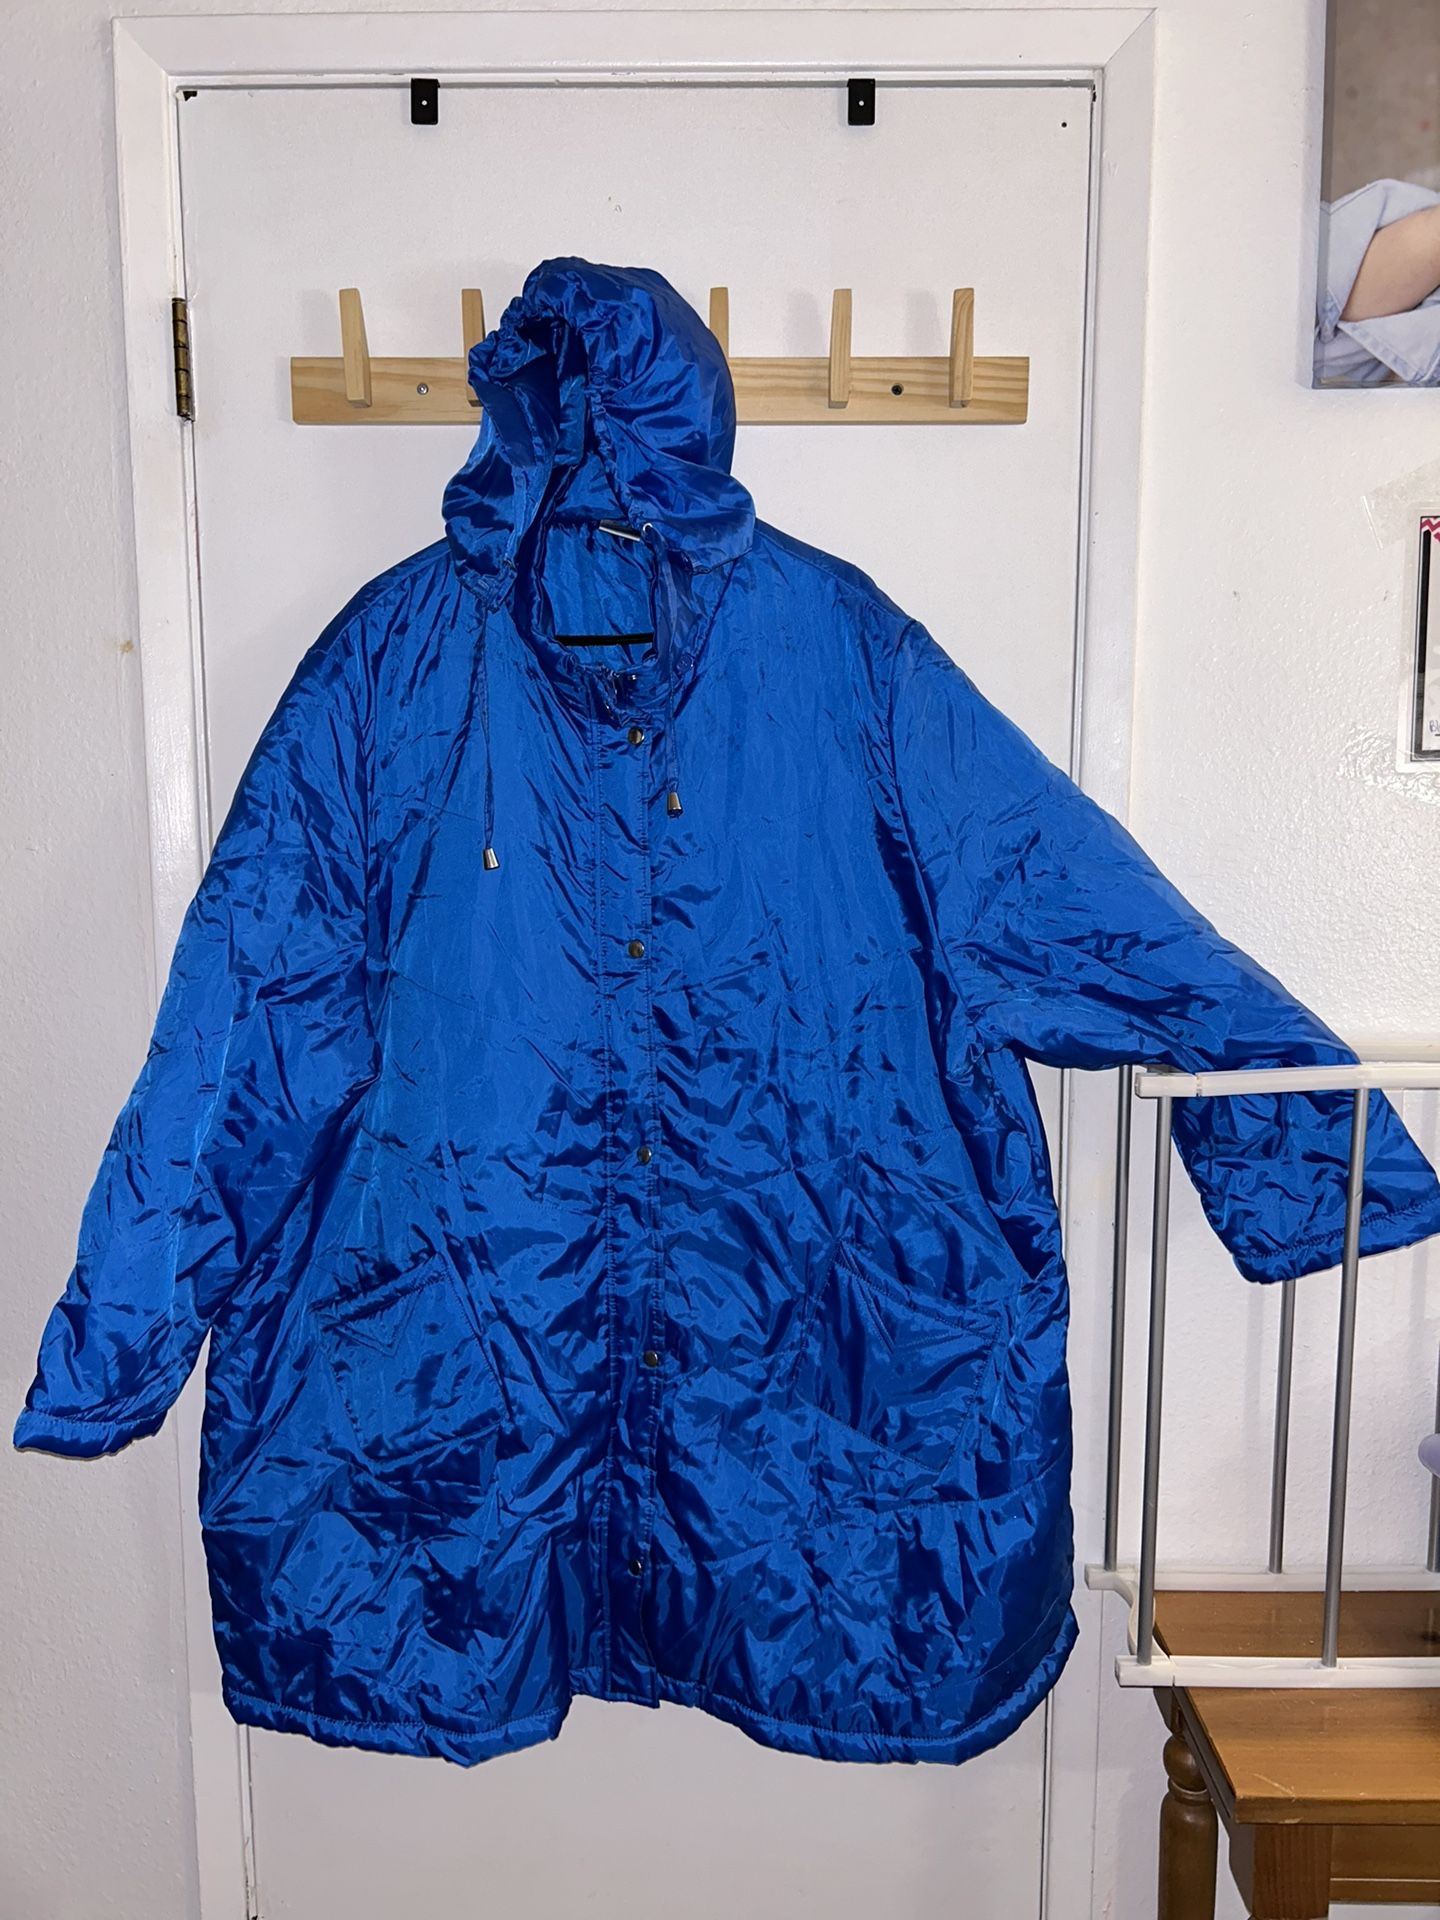 Polyester Nylon Water Resistant Metallic Blue Rain Jacket 3/4 Length Men’s Sz 4X